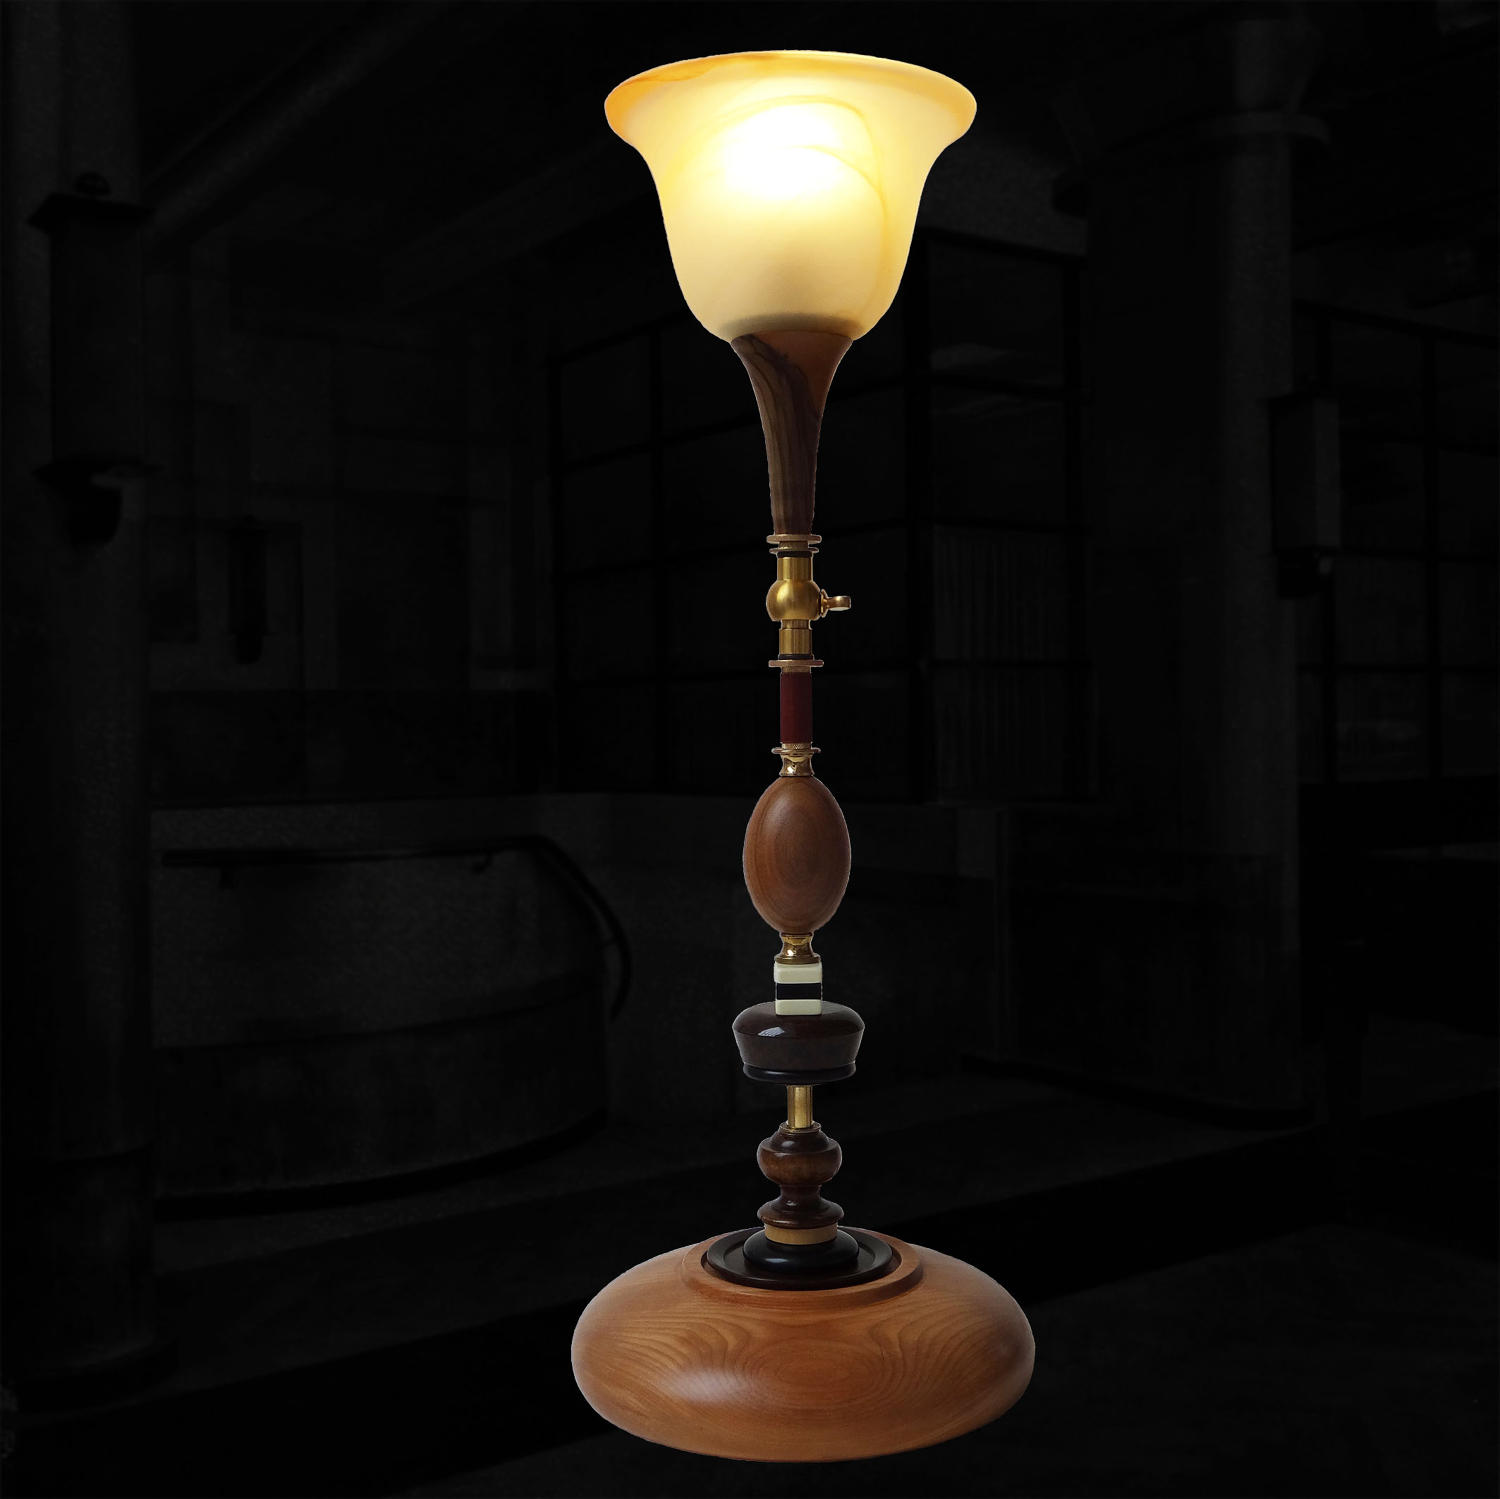 Unique artist-designed lamp - Variazioni II - by Gilles Bourlet